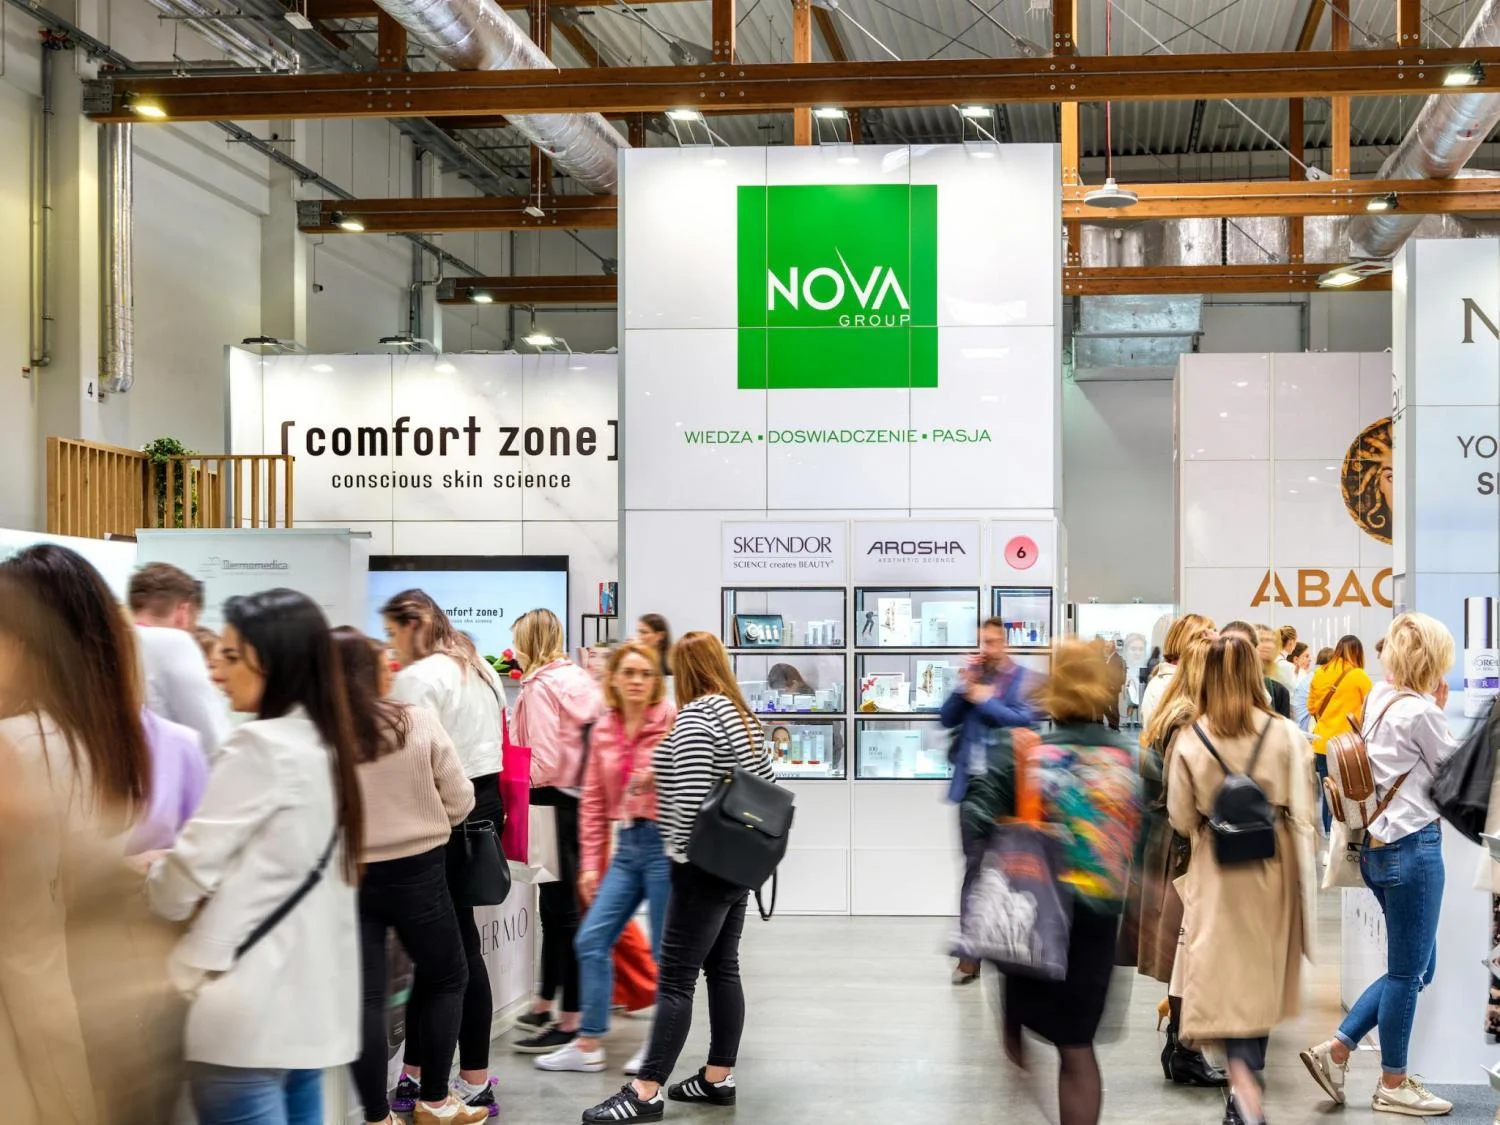 Stoisko na targi dla marki Nova Group - projekt i realizacja Clever Frame